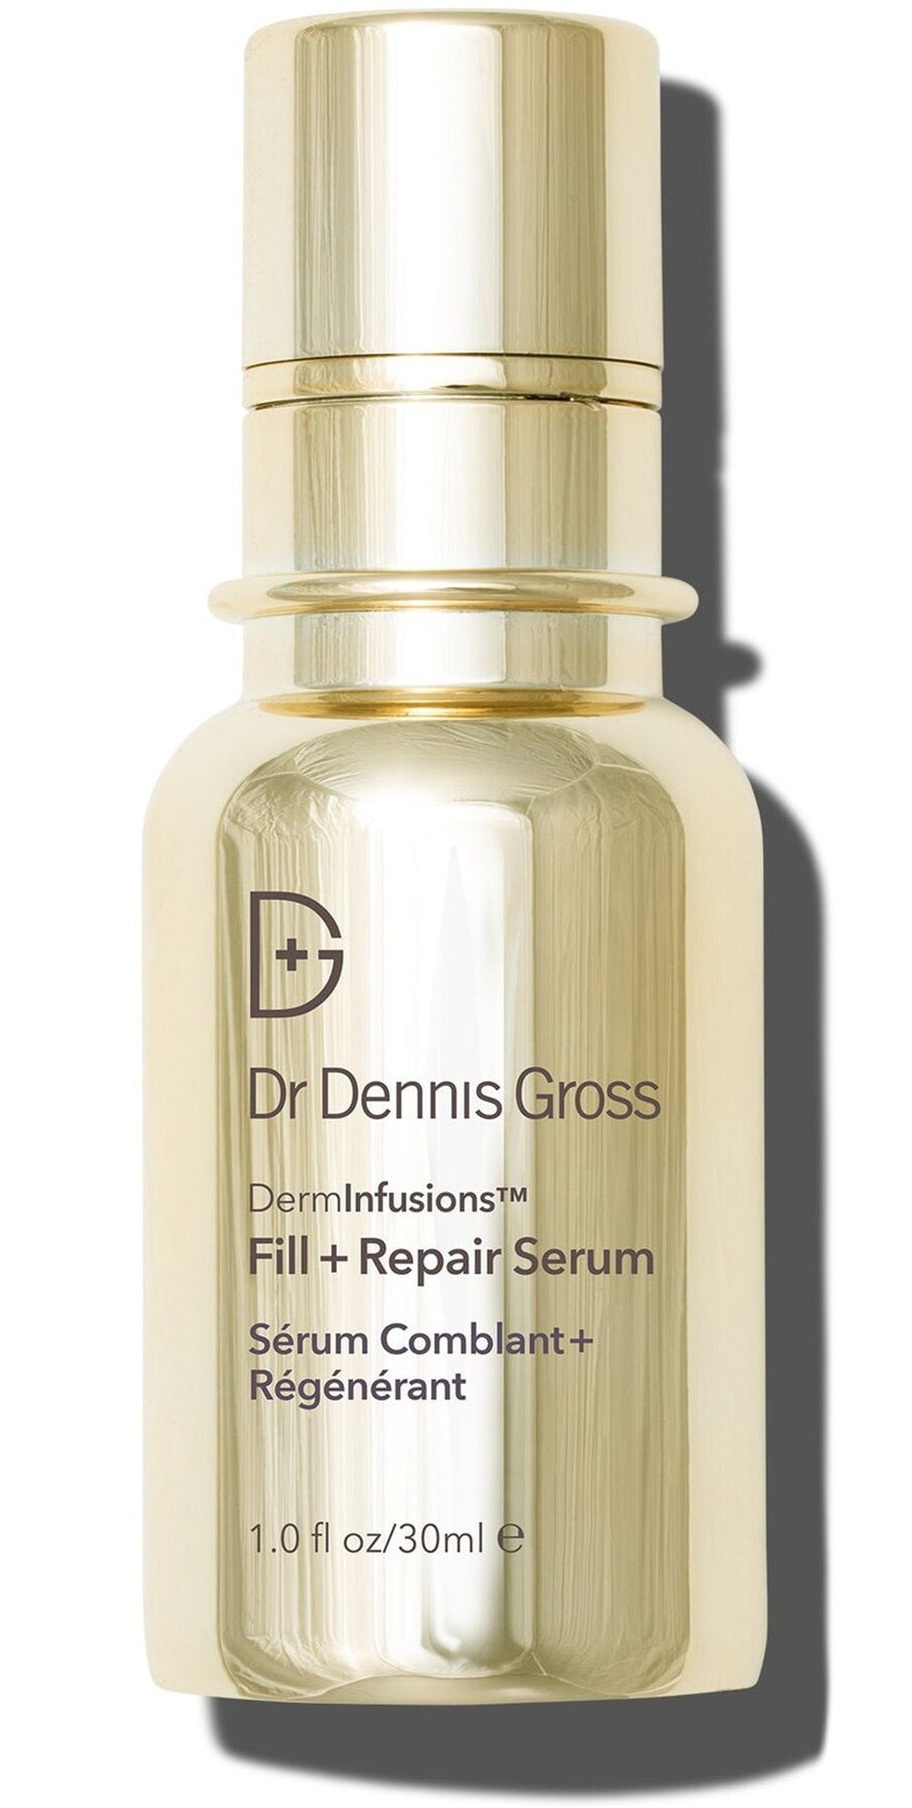 Dr Dennis Gross Derminfusions™ Fill + Repair Serum